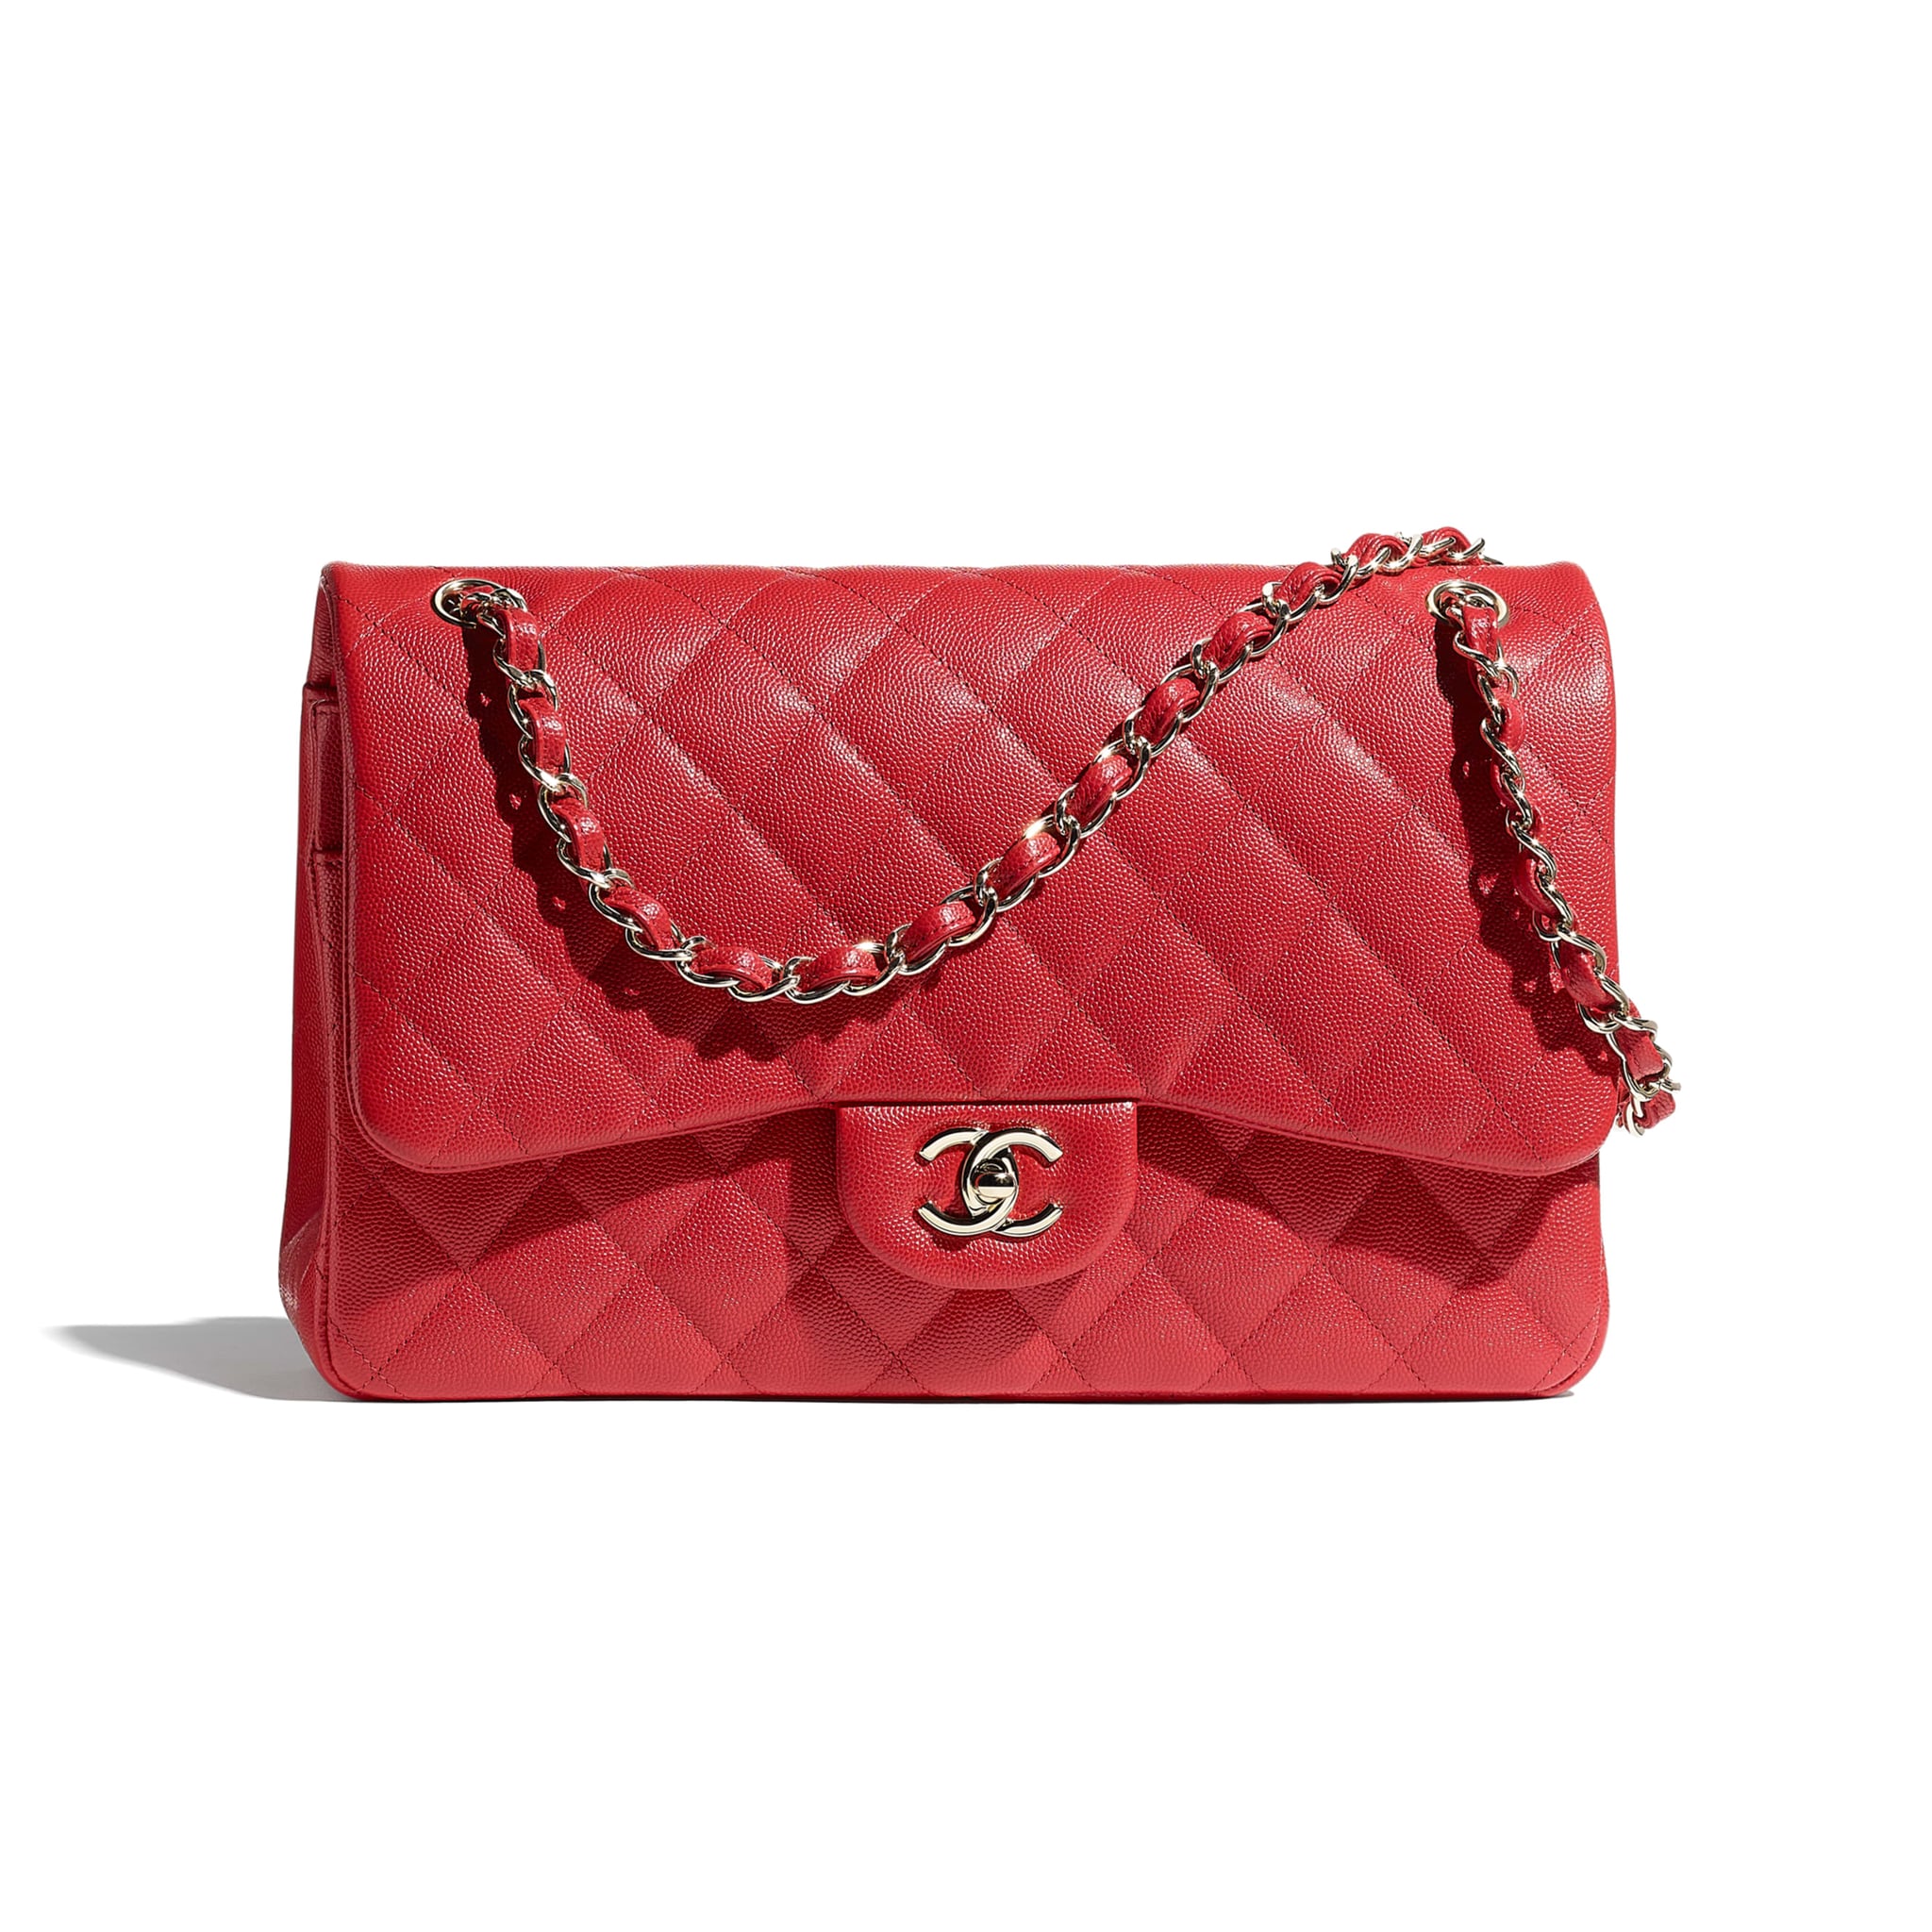 Chanel Large Classic Handbag in Grained Calfskin ($7,400)